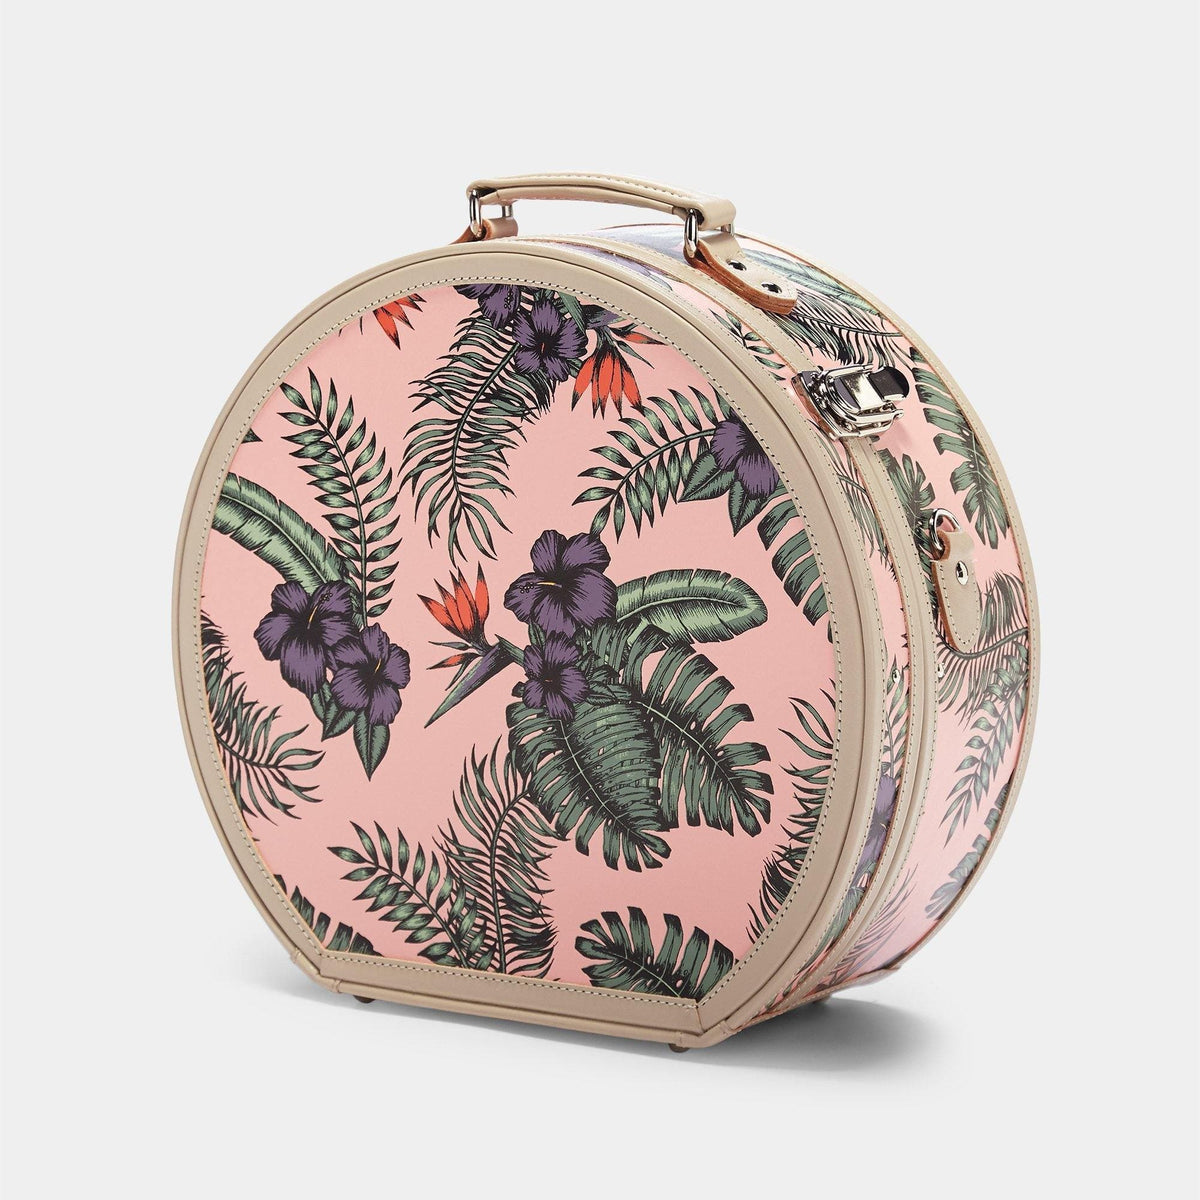 The Botanist - Pink Hatbox Large Hatbox Large Steamline Luggage 